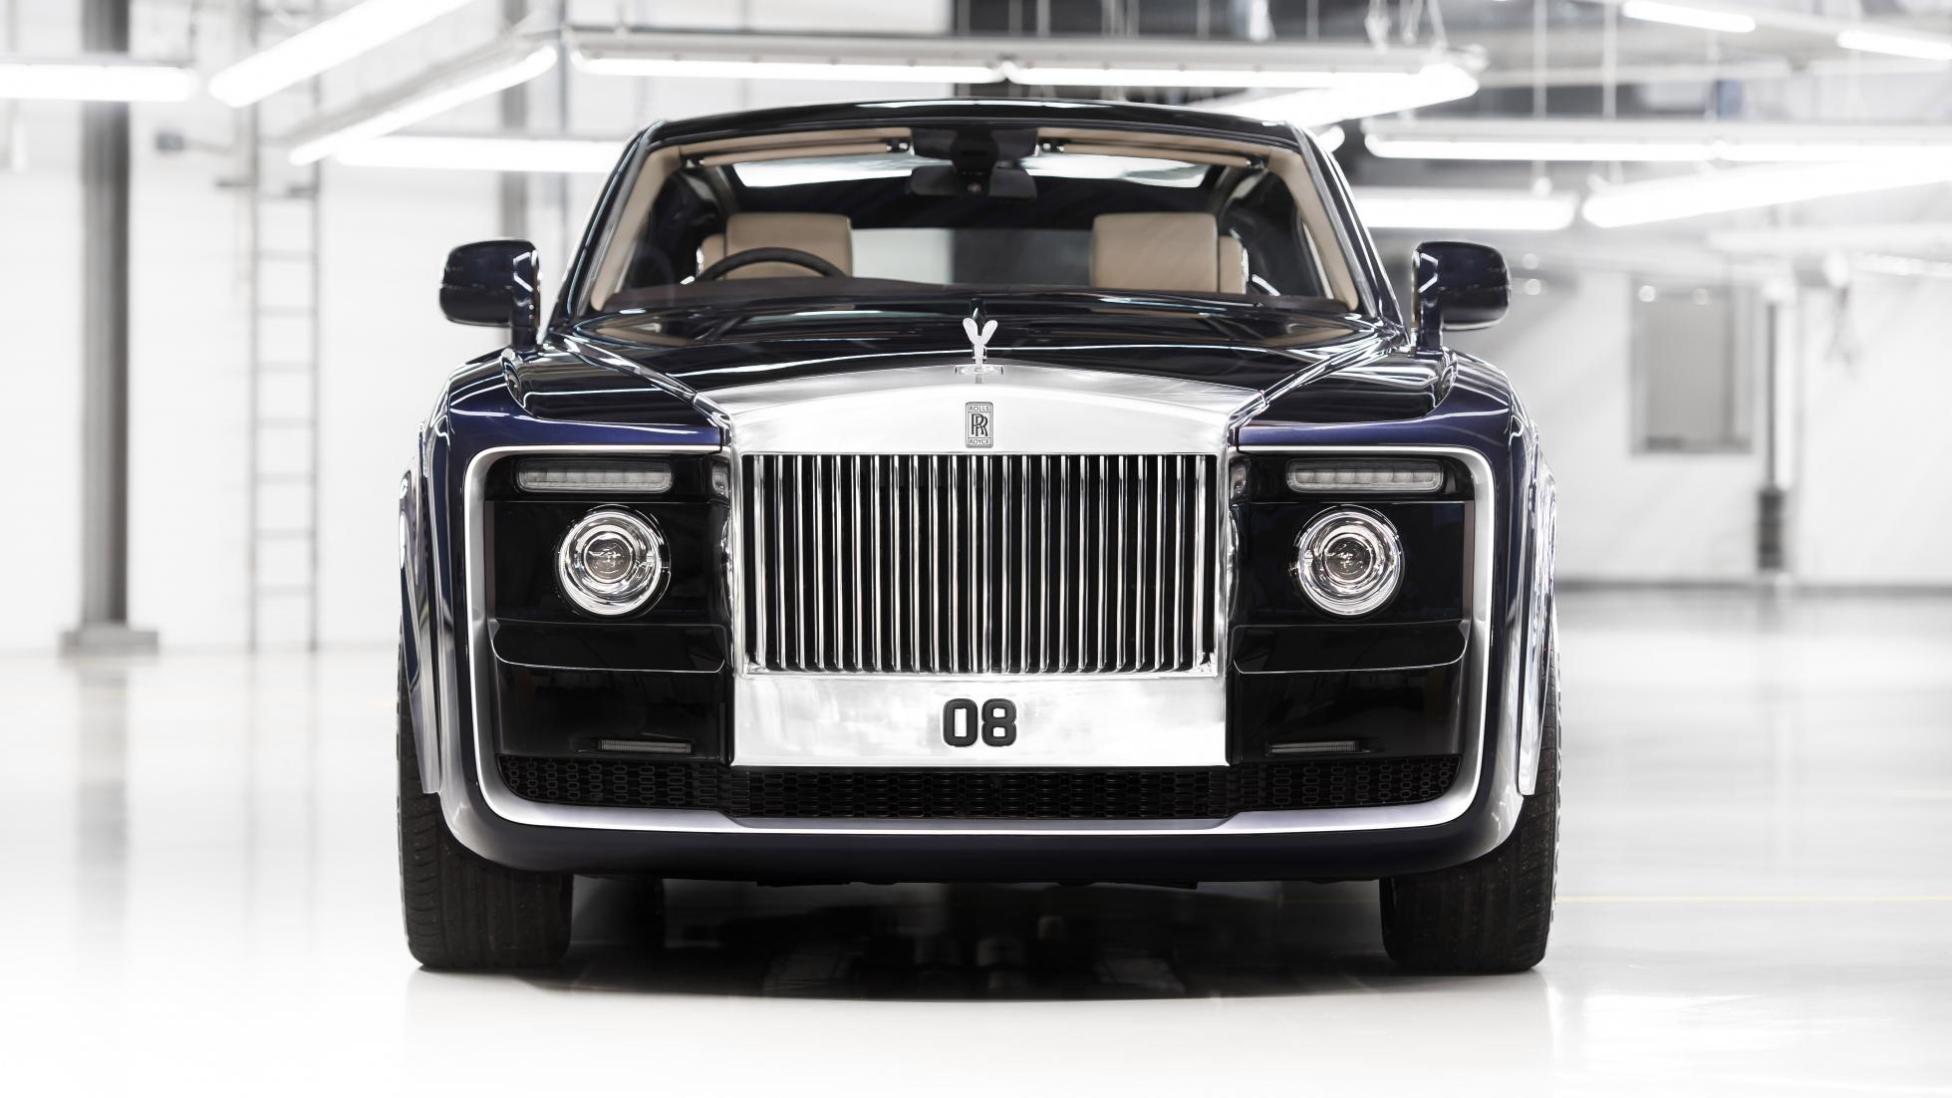 De Duurste Auto Ter Wereld Rolls Royce Sweptail Topgear 9481